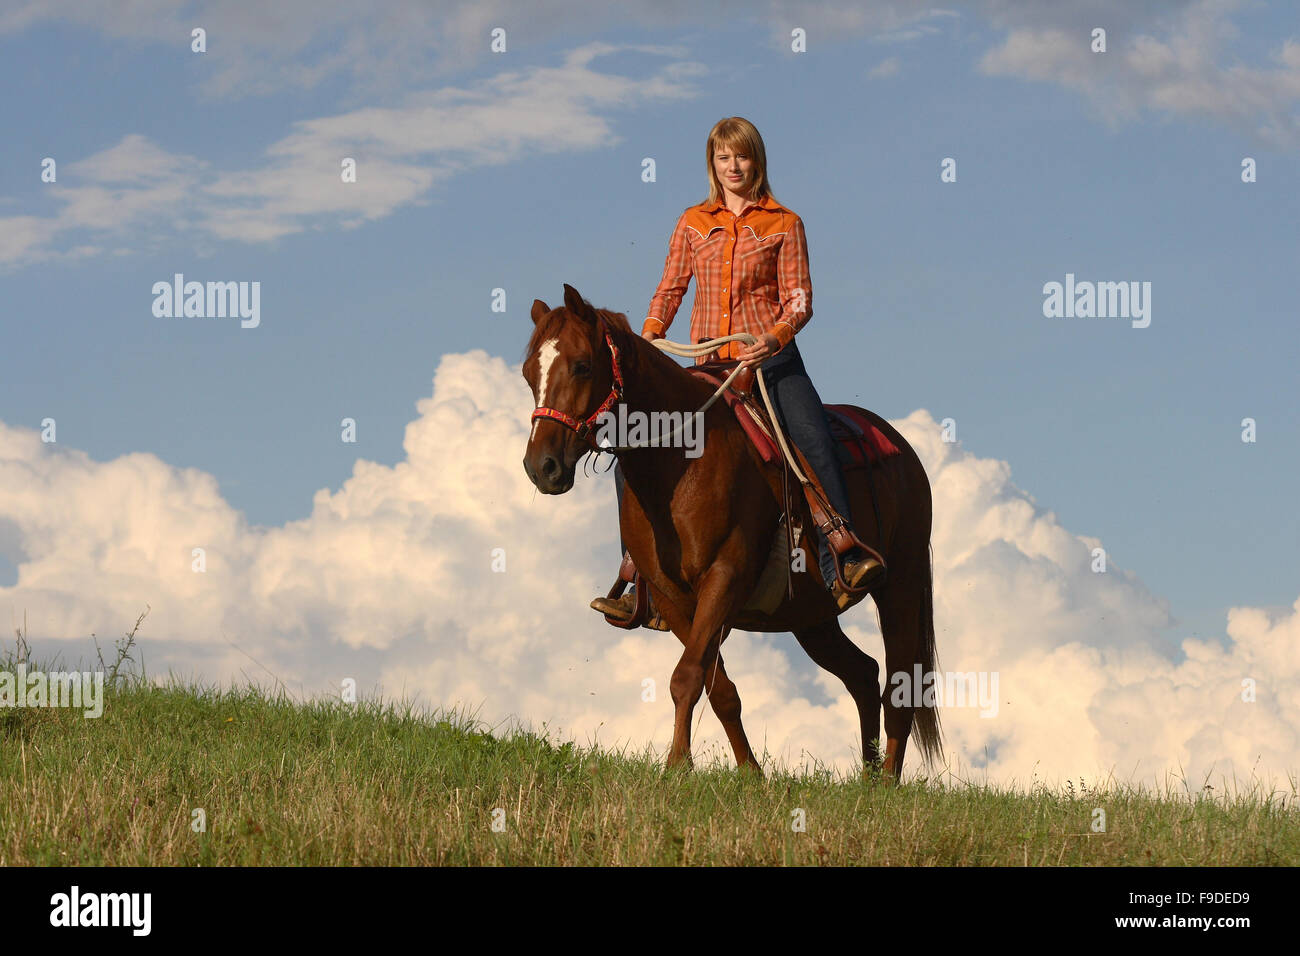 Woman riding a horse Stock Photo